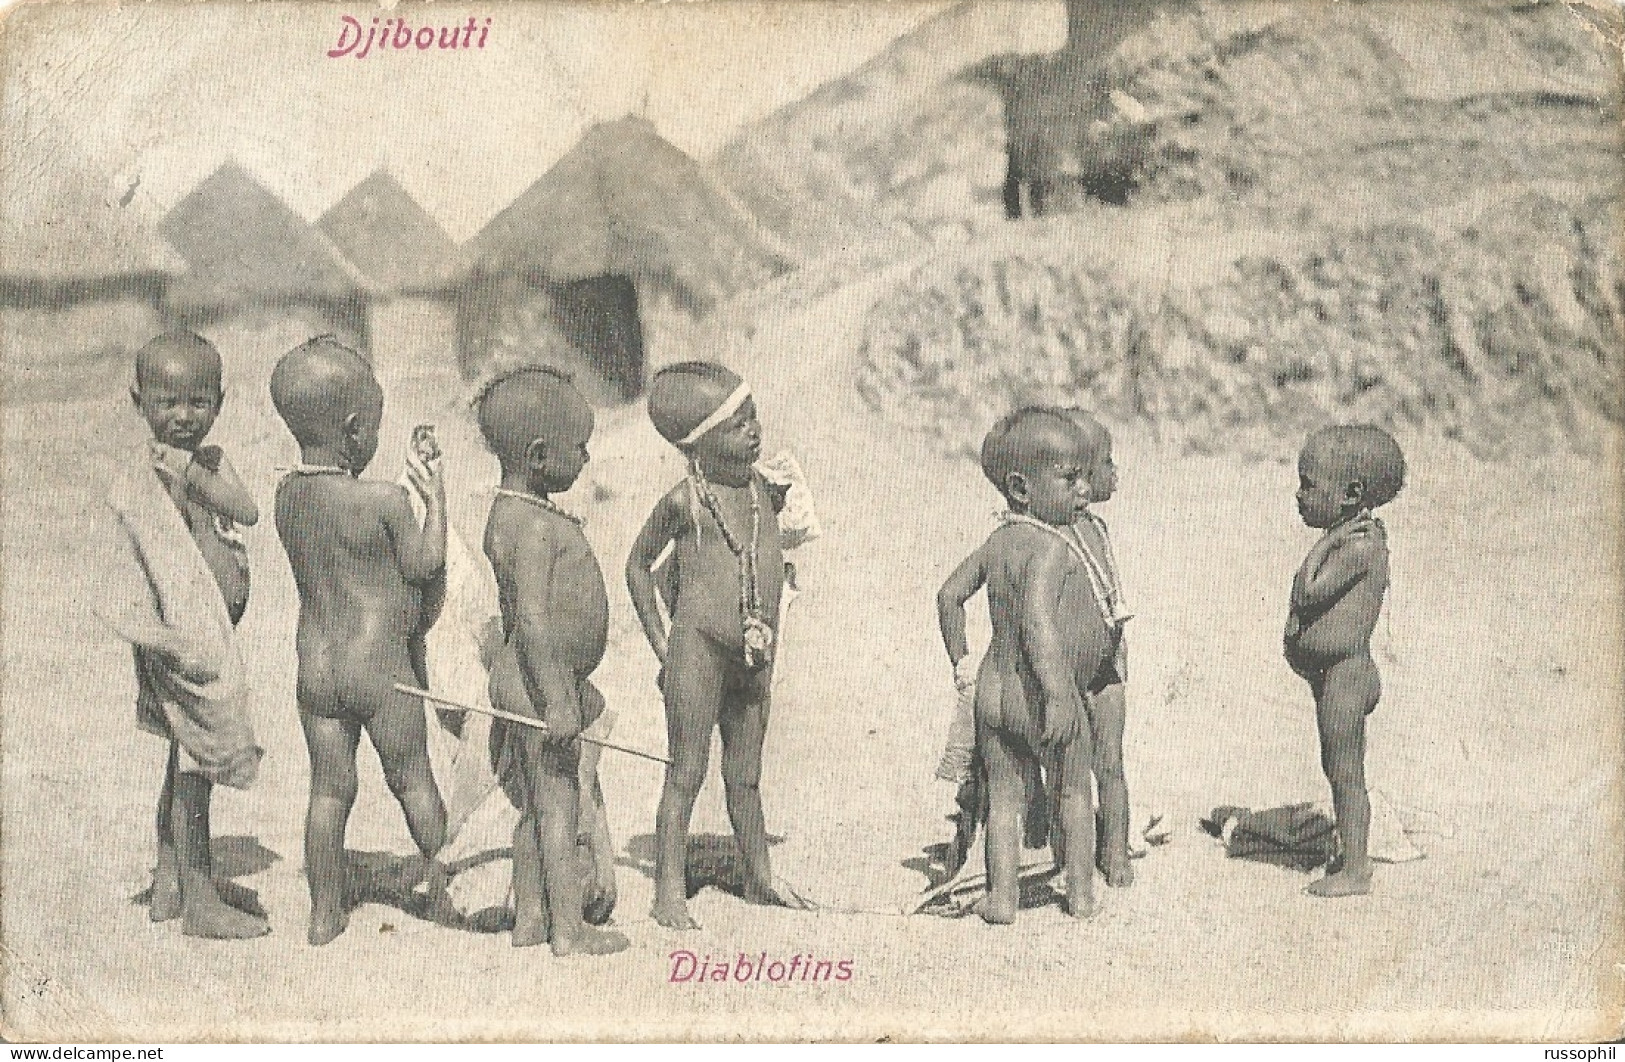 DJIBOUTI - DIABLOTINS - 1904 - Afrika